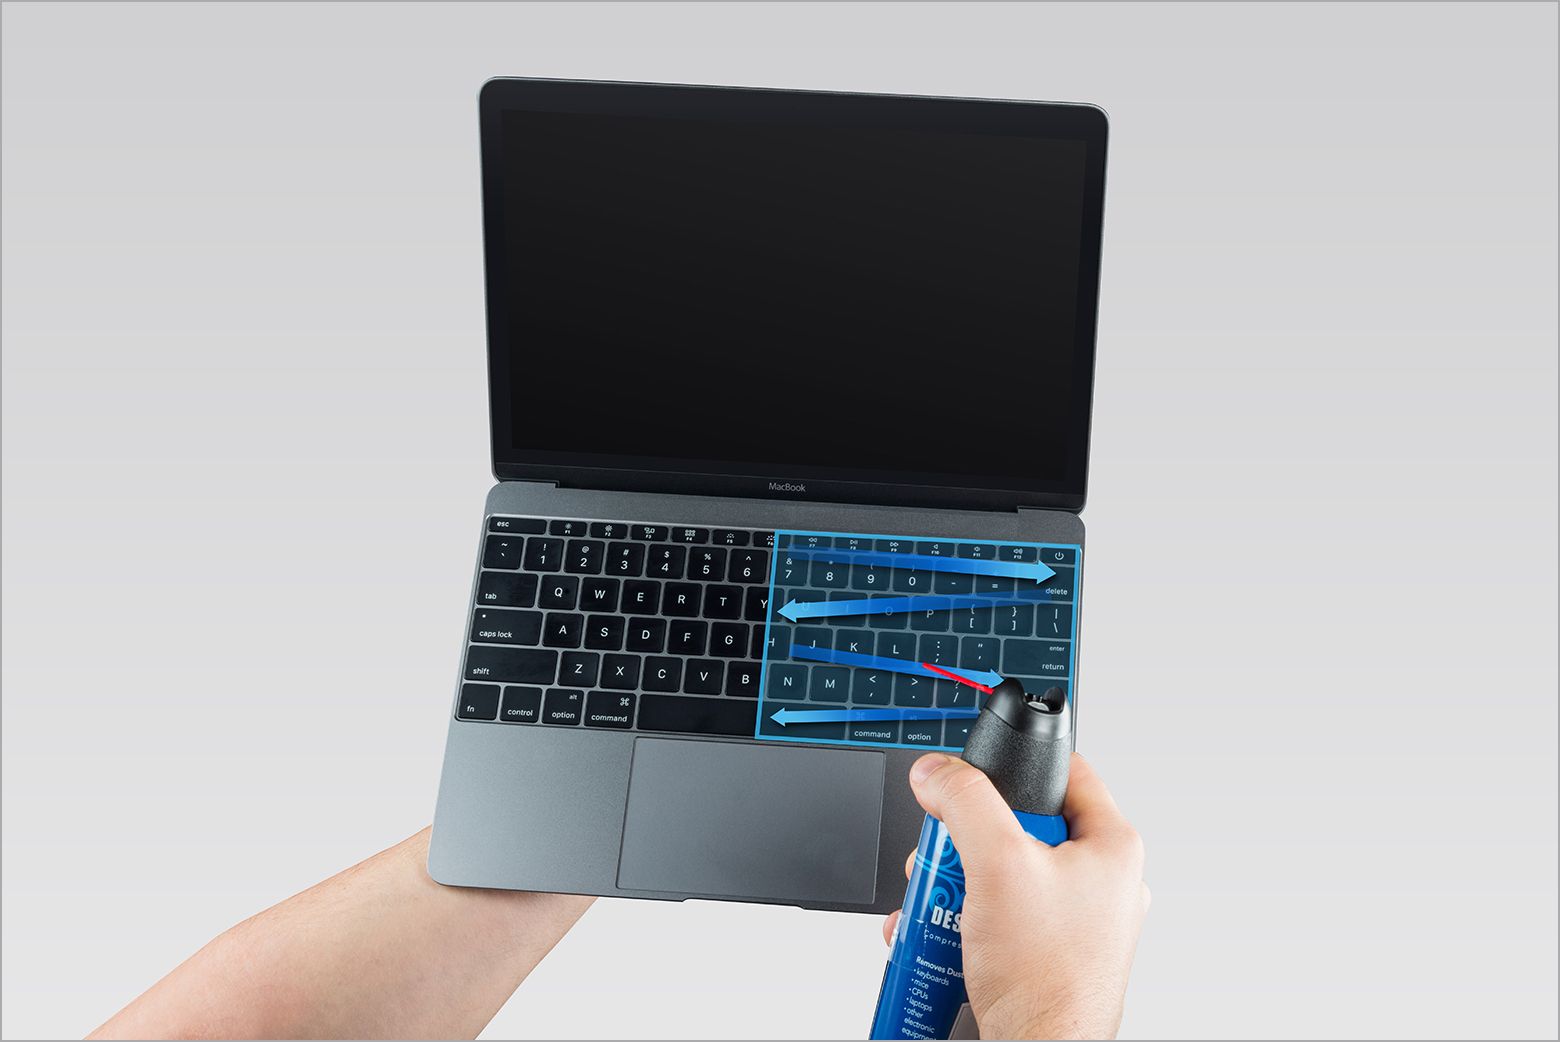 How To Clean A Macbook Keyboard